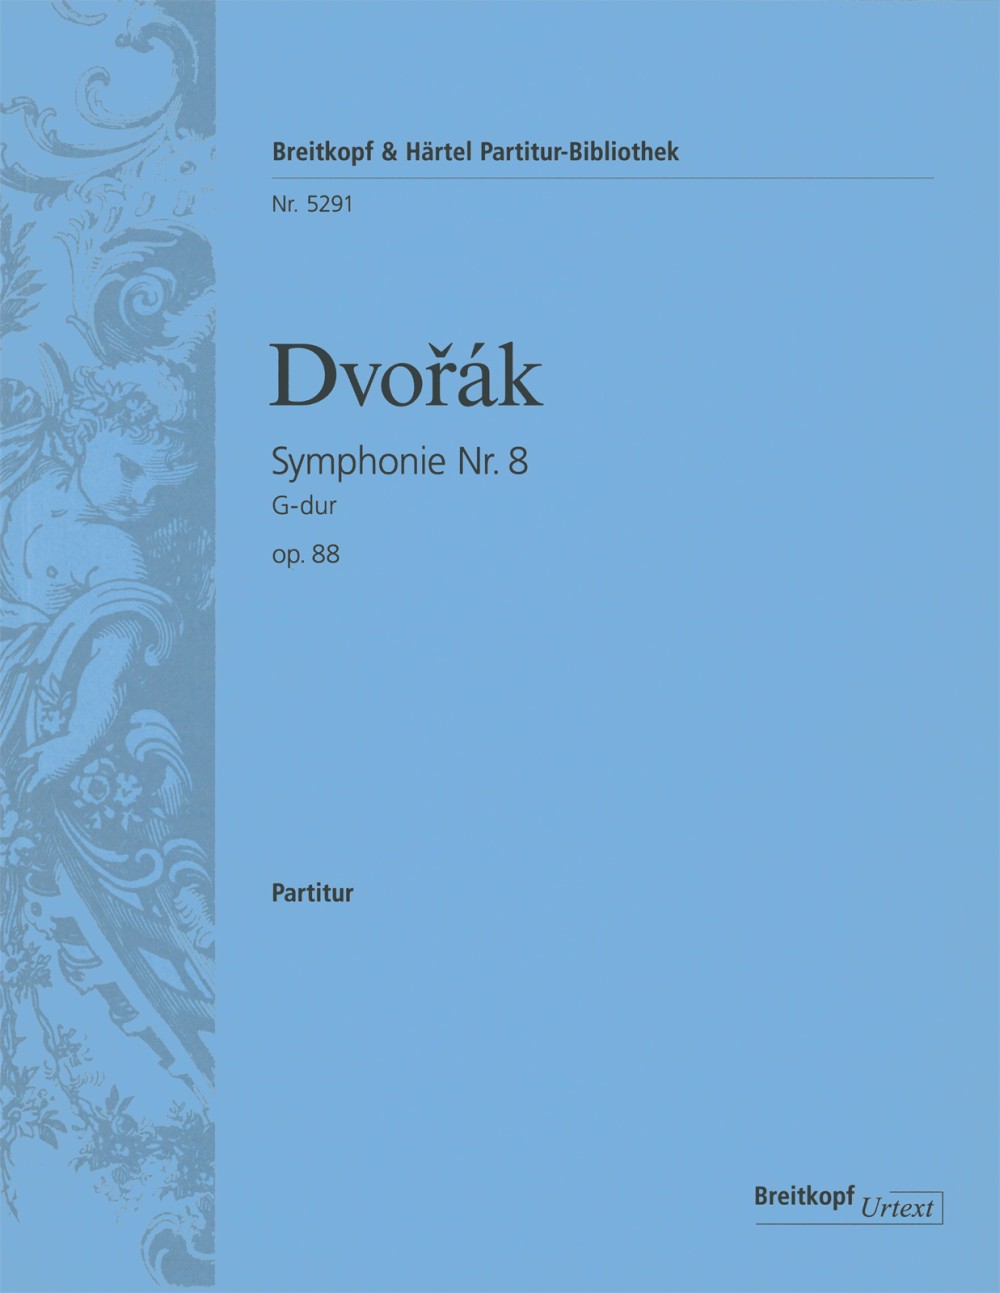 Dvorak Symphony No 8 in G major Opus 88